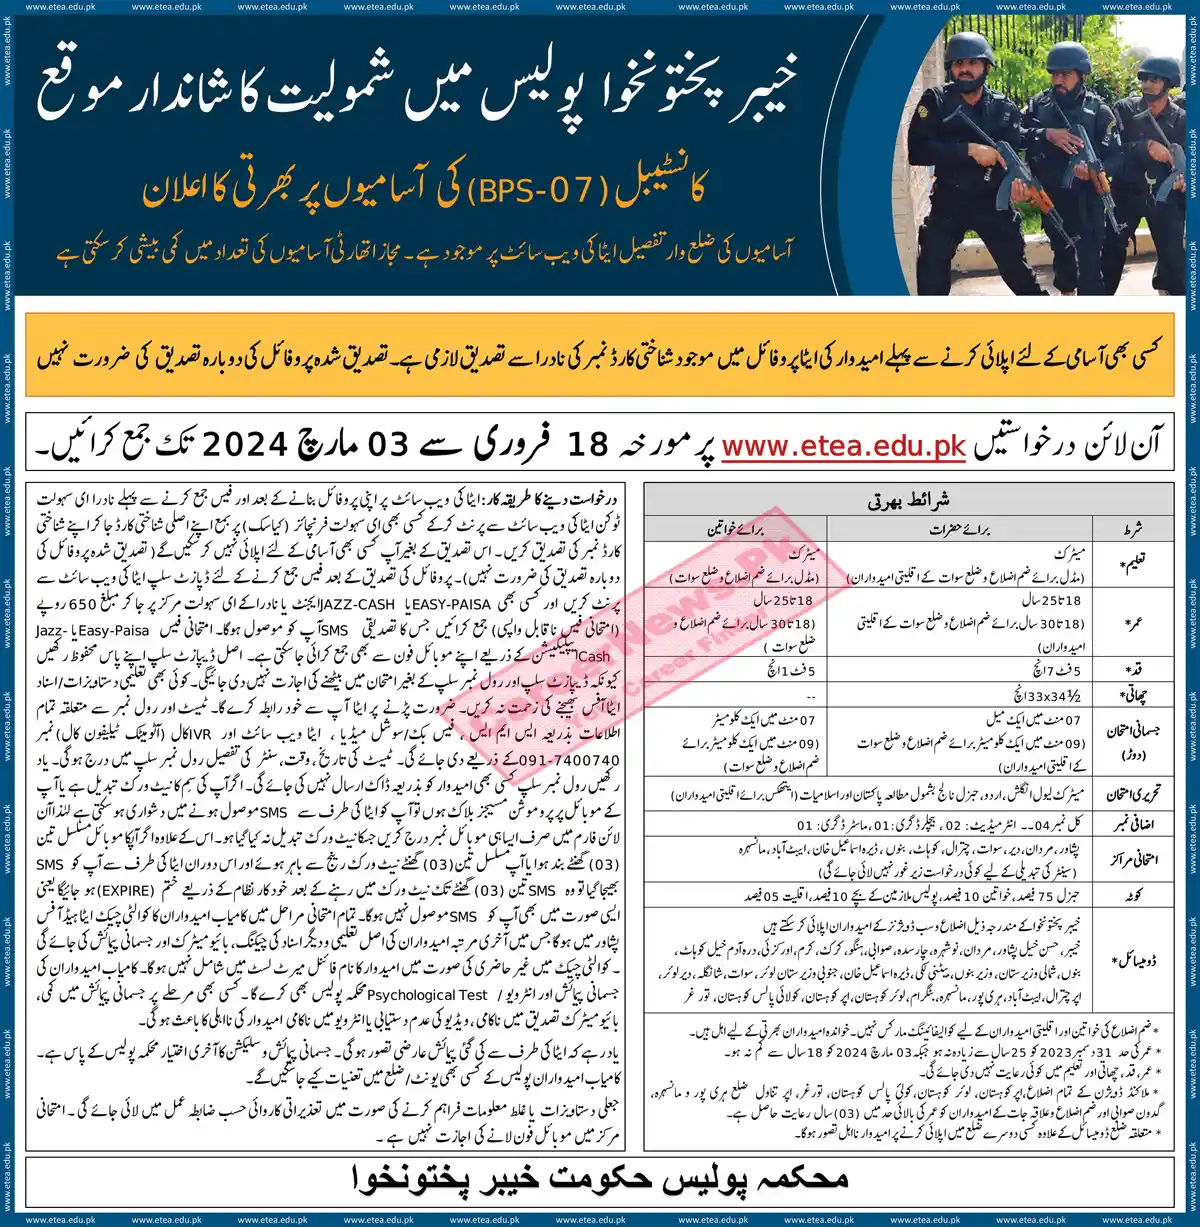 KPK Police announces Constables (BPS-07) Recruitment 2024